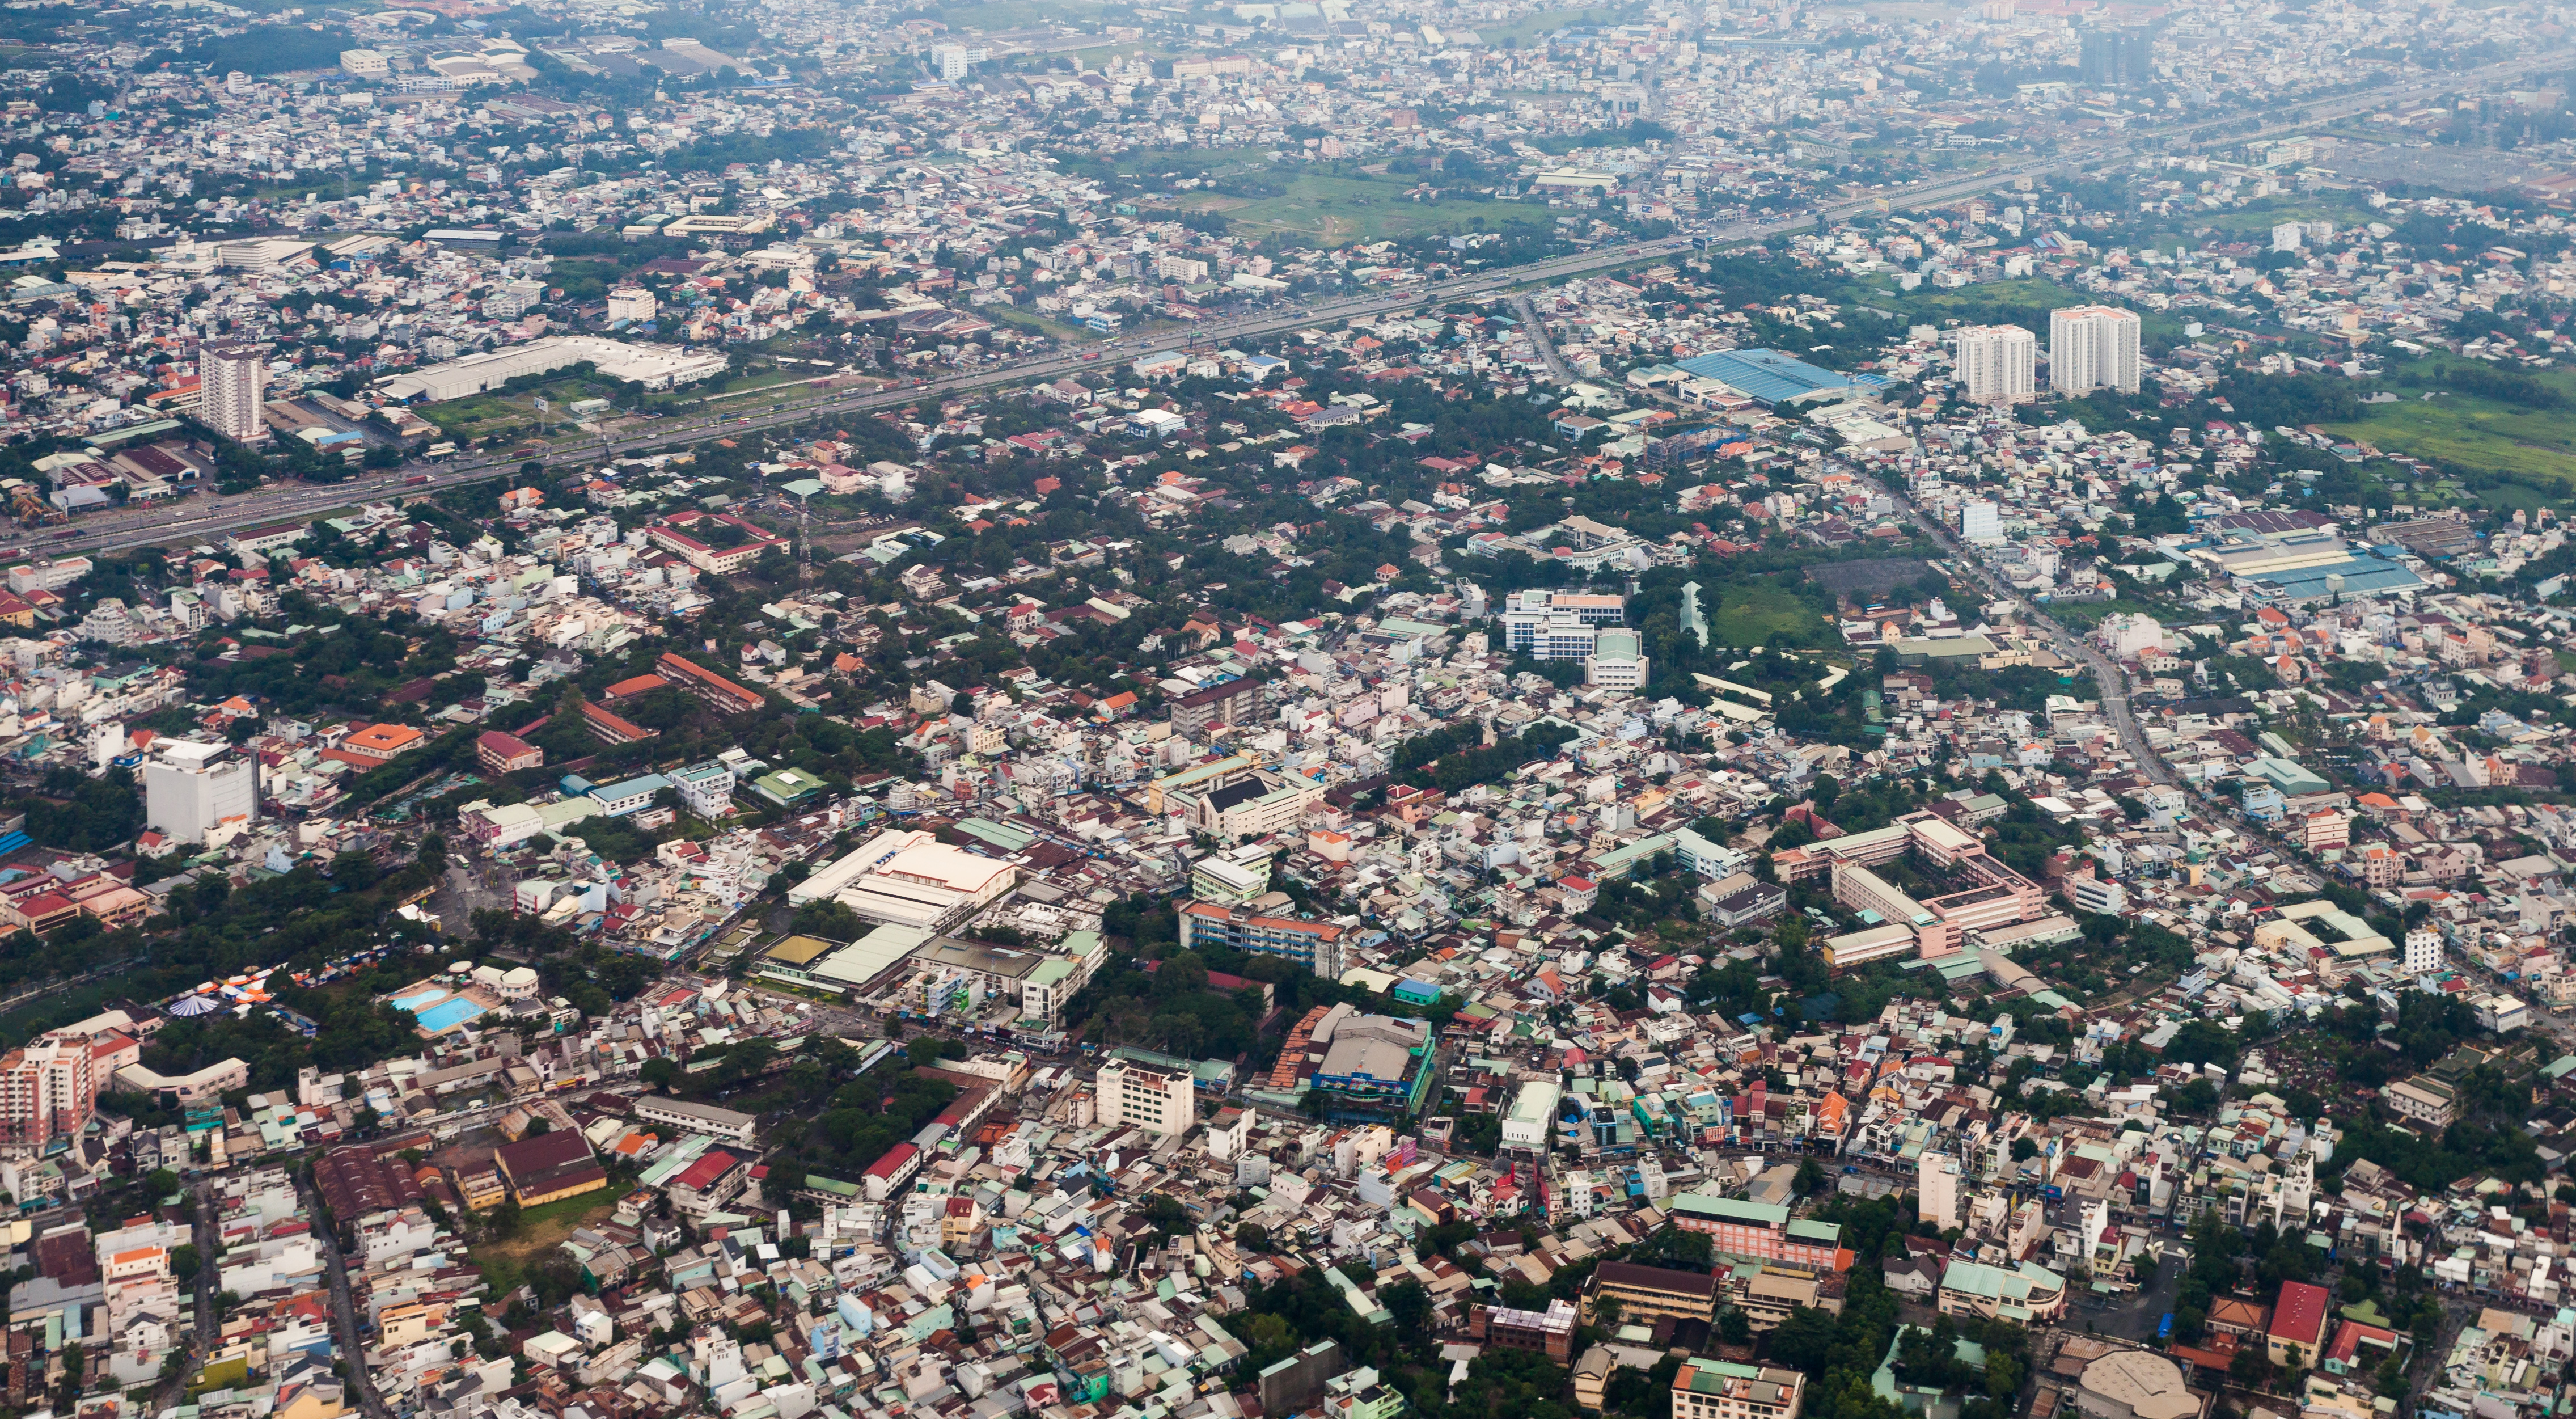 Vista aérea de Ciudad Ho Chi Minh, Vietnam, 2013-08-13, DD 06